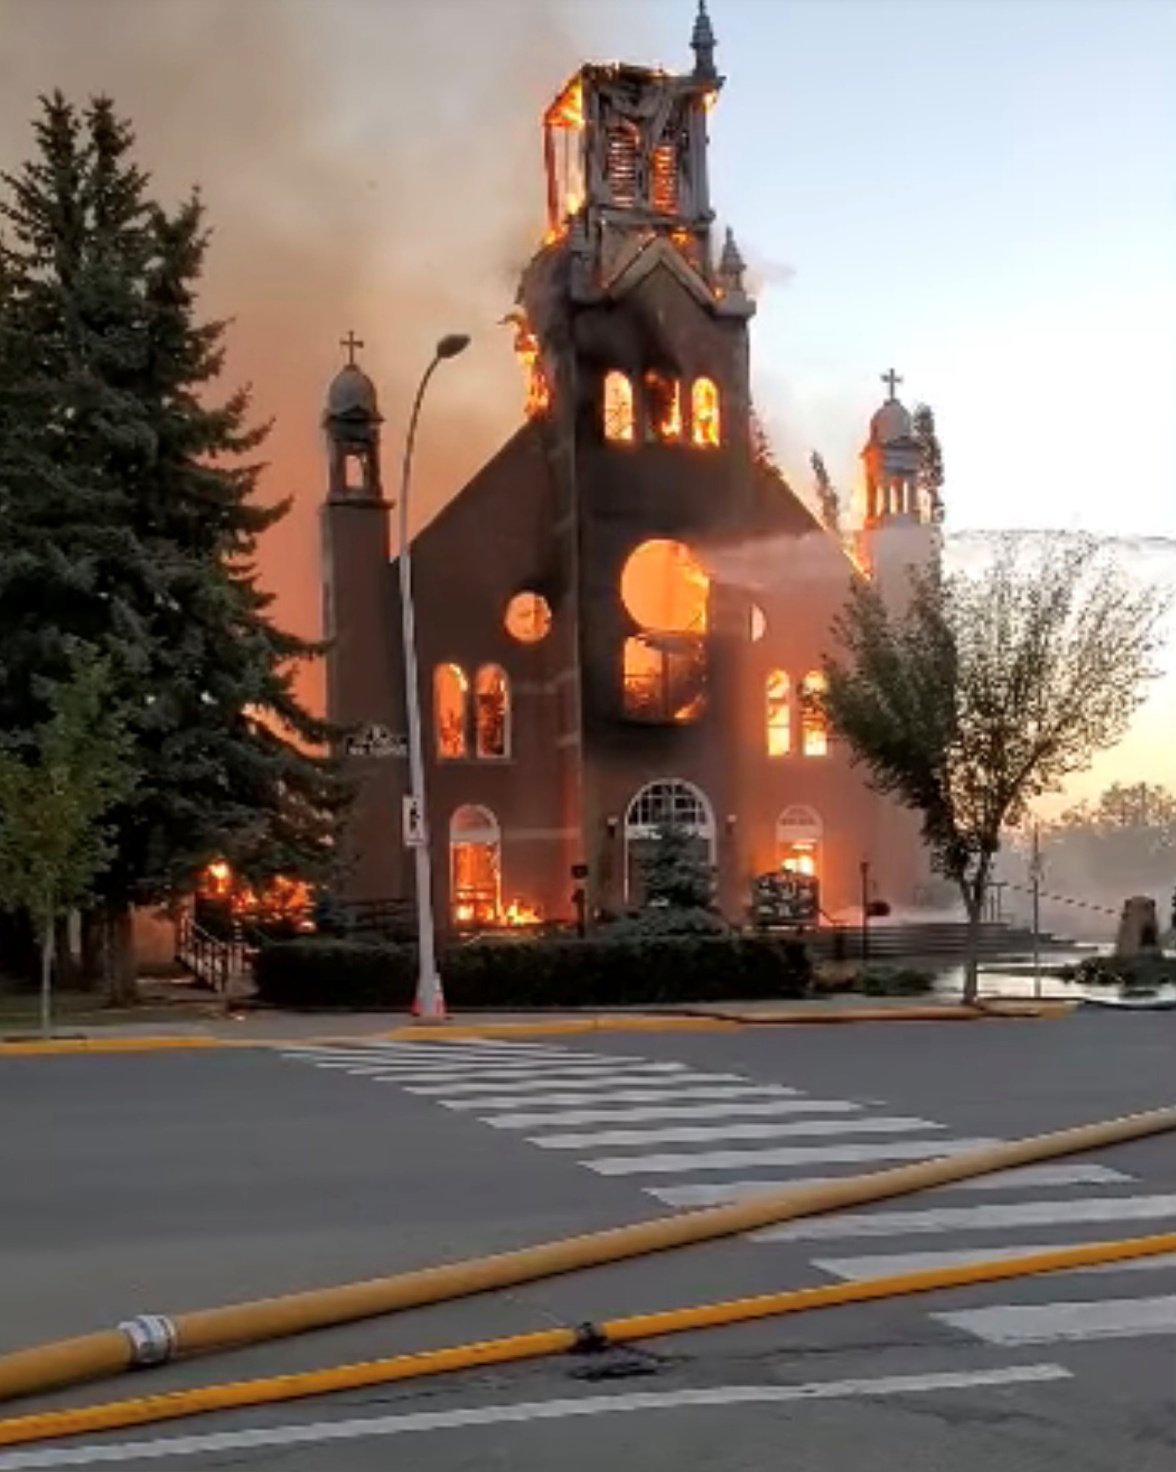 Torched Alberta church’s parishioners looking forward